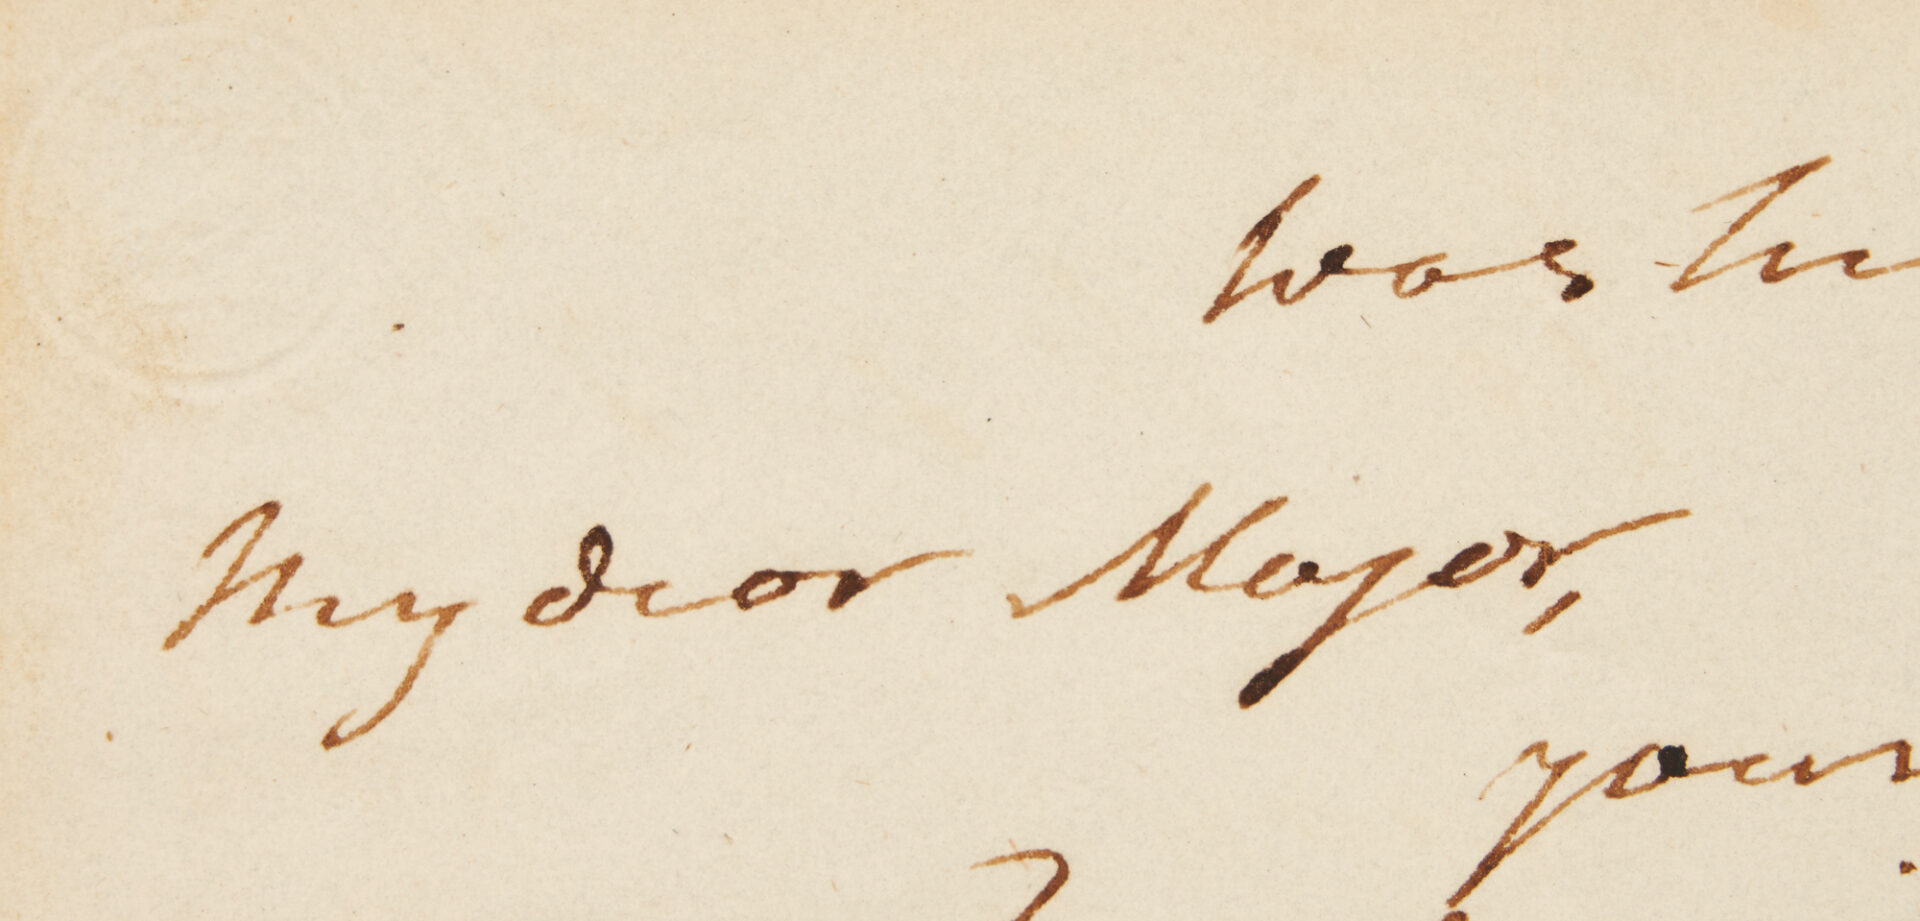 Lot 634: President Andrew Jackson Signed Letter to Andrew Jackson Donelson, 1836